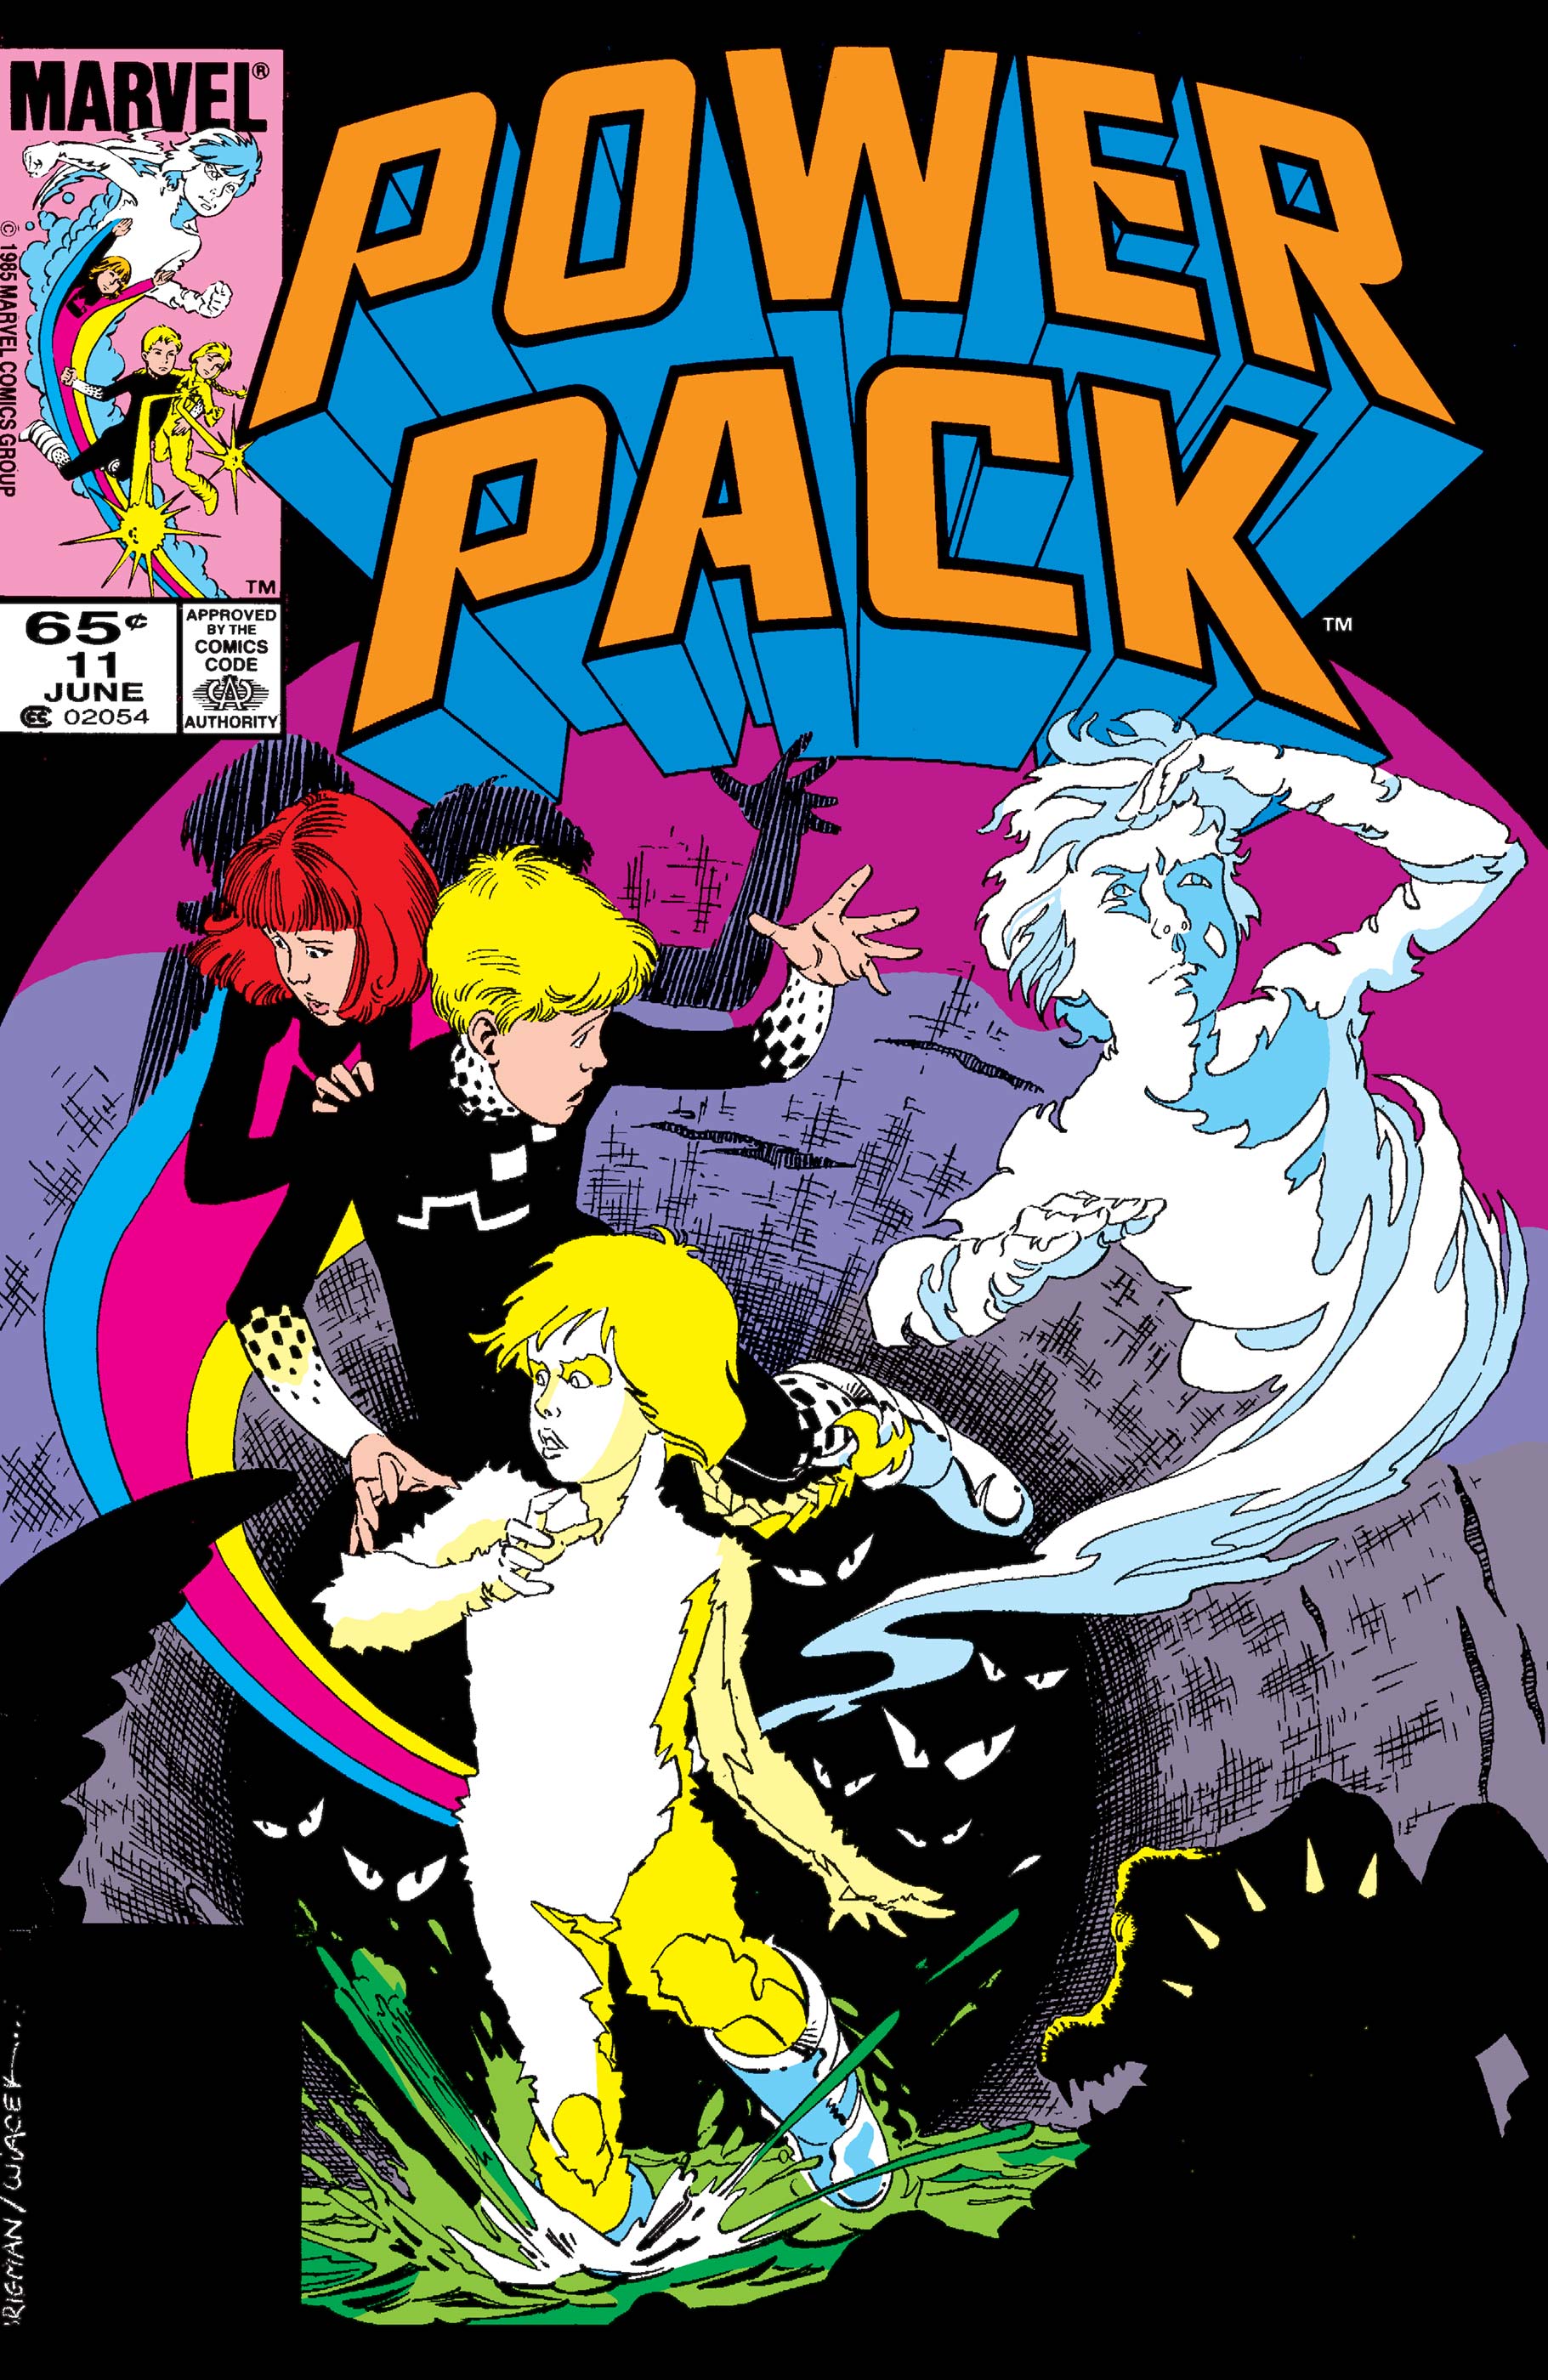 Power Pack (1984) #11